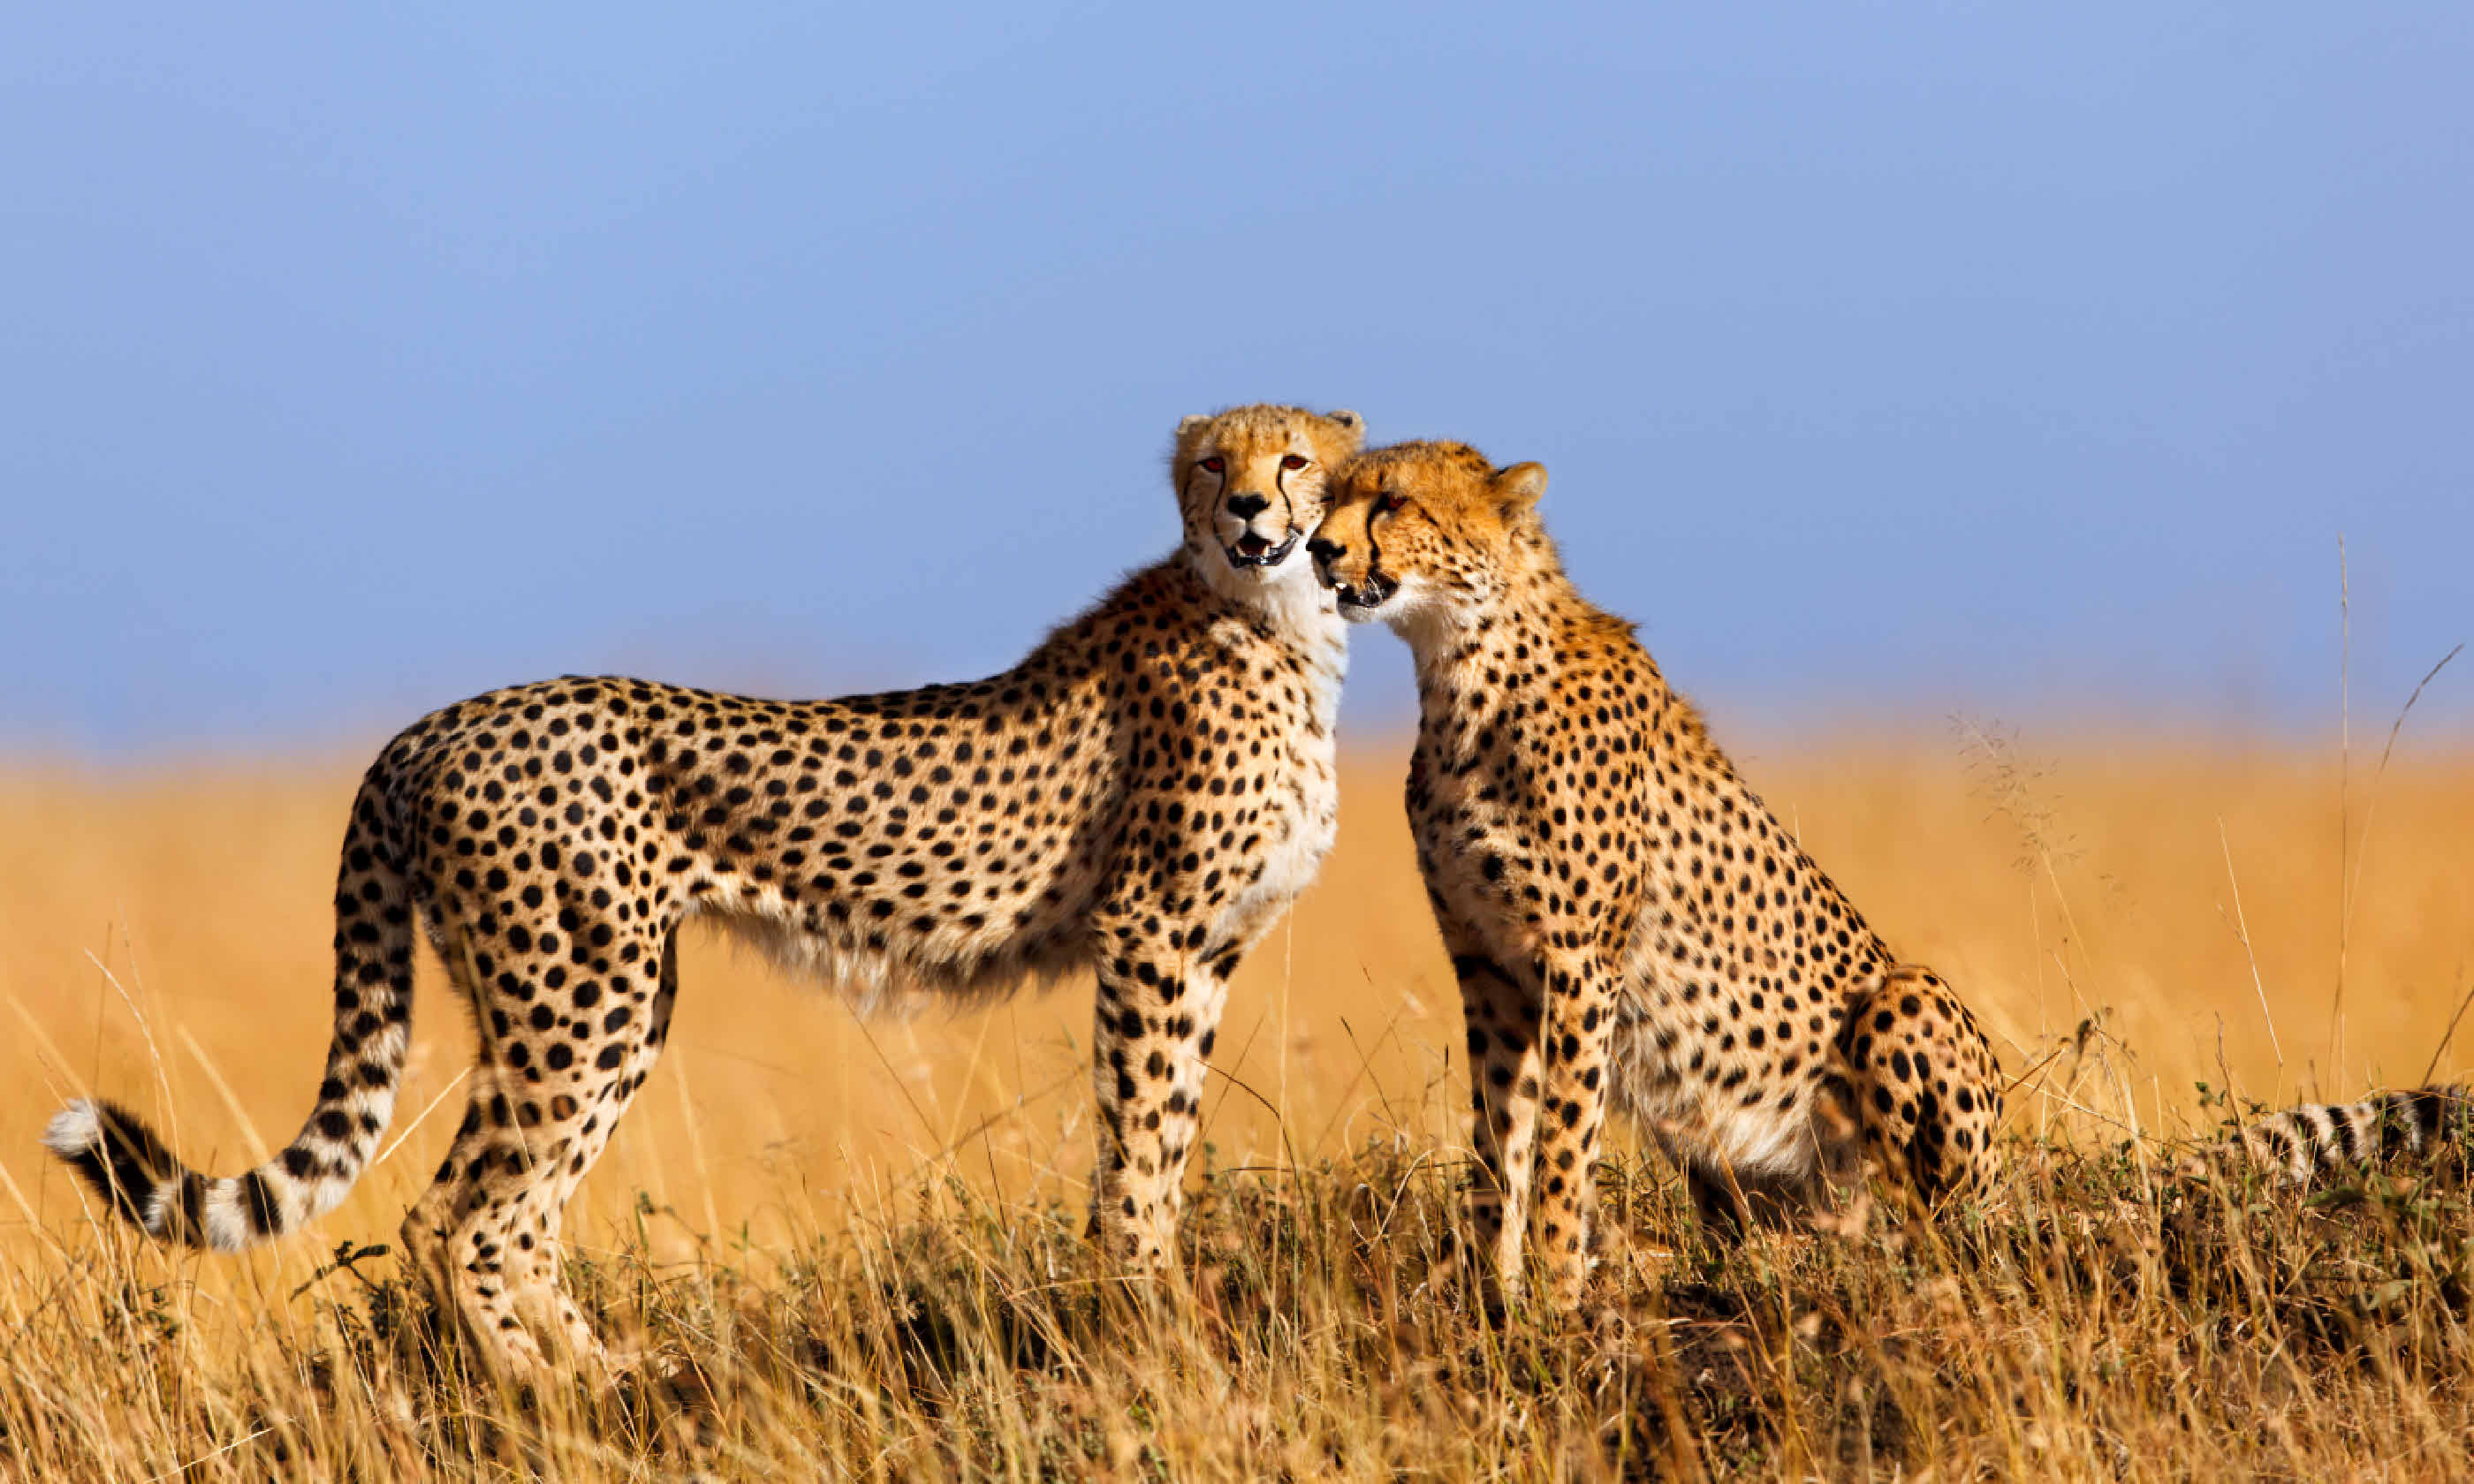 Cheetahs in Masai Mara, Kenya (Shutterstock: see credit below)